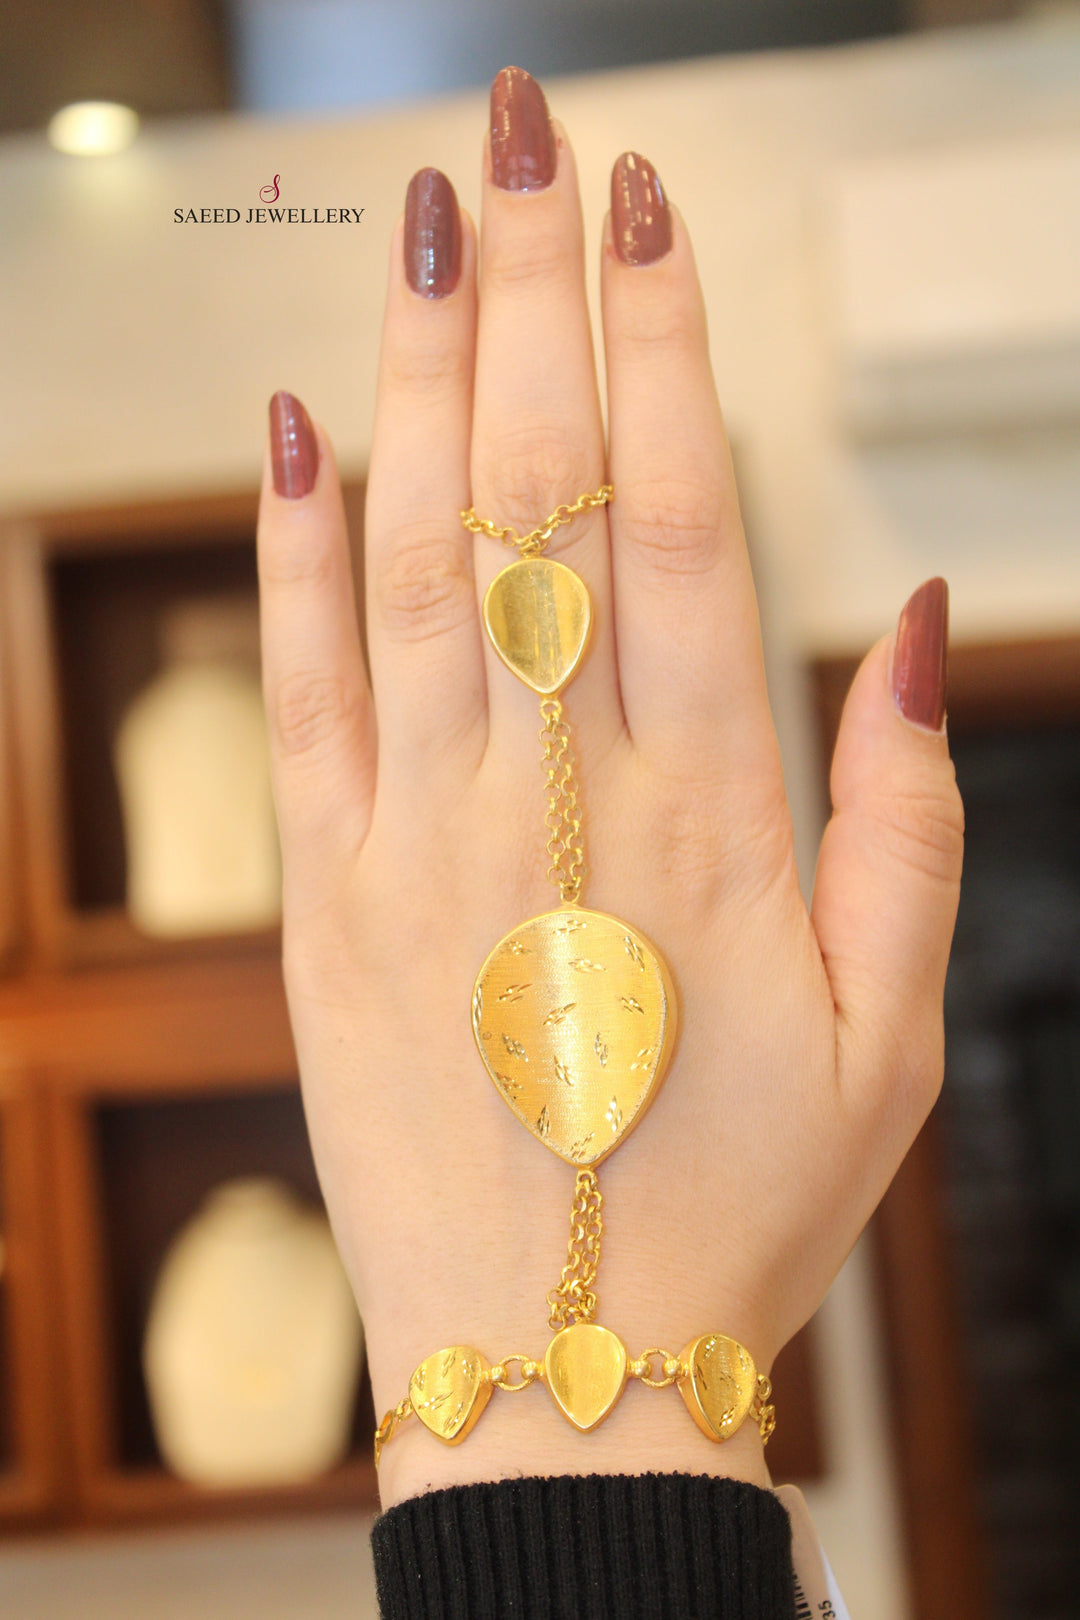 21K Gold Emirati Hand Bracelet by Saeed Jewelry - Image 1